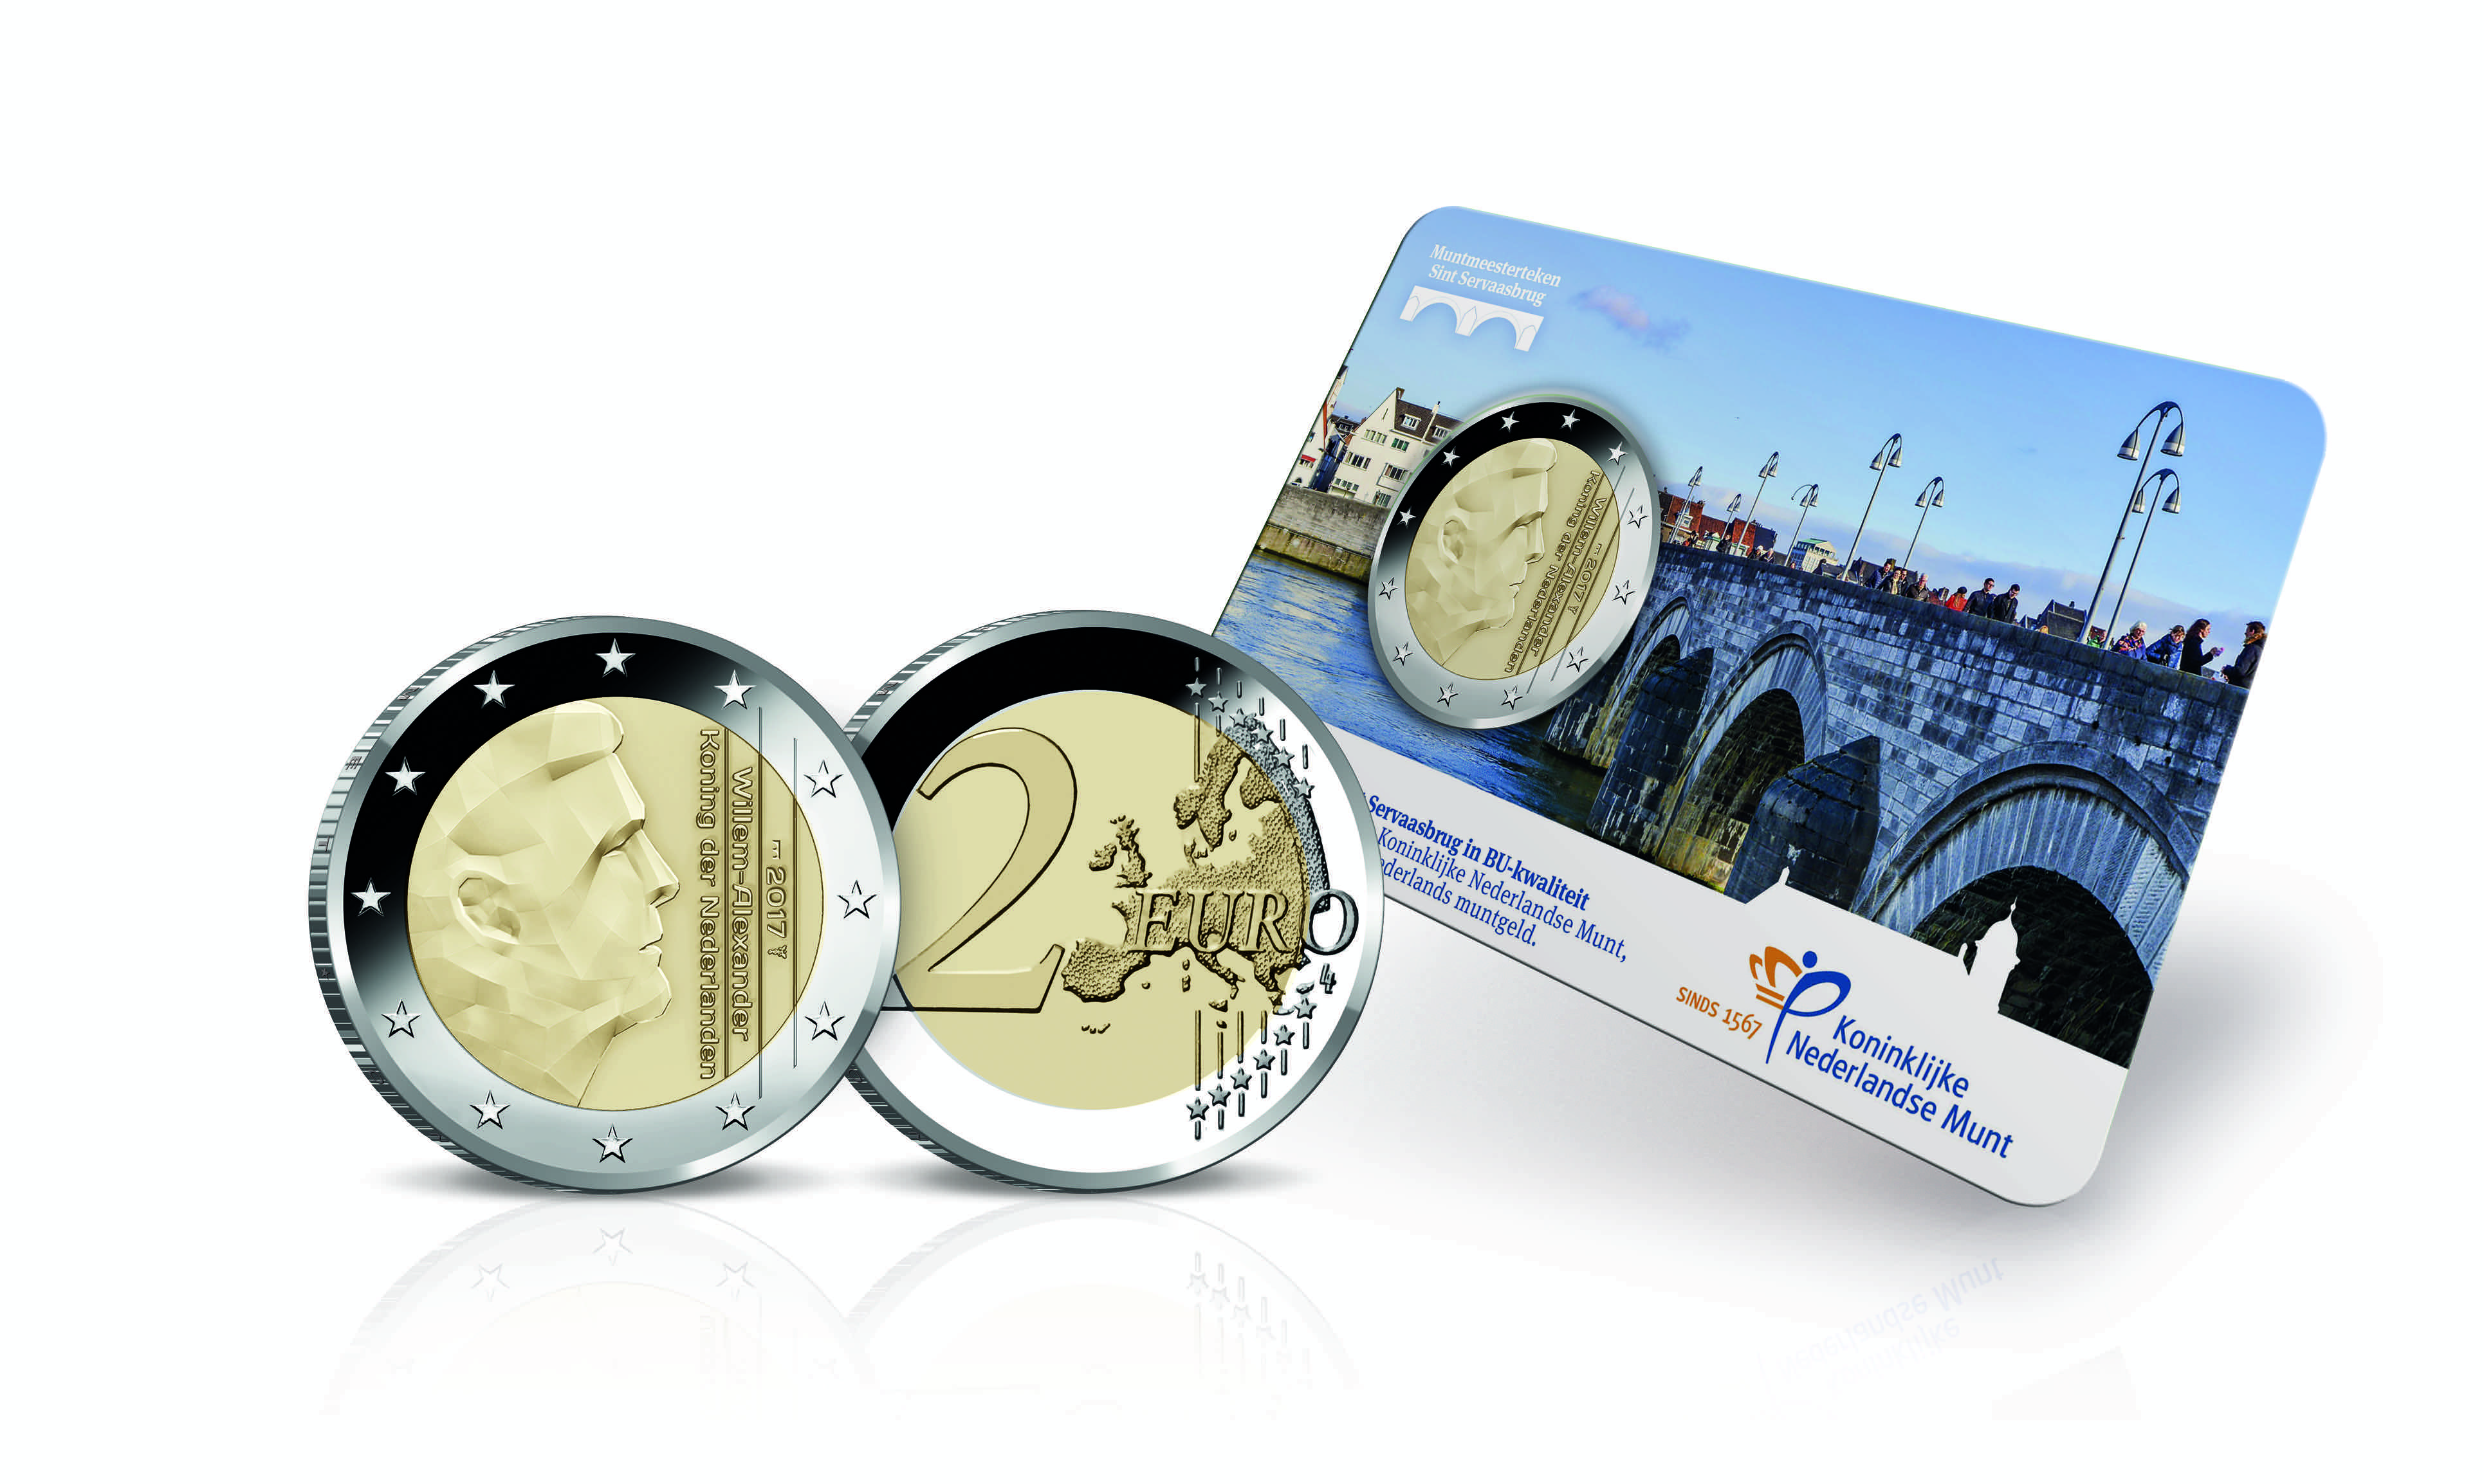 Sint Servaasbrug 2 Euro 2017 coincard in BU-kwaliteit